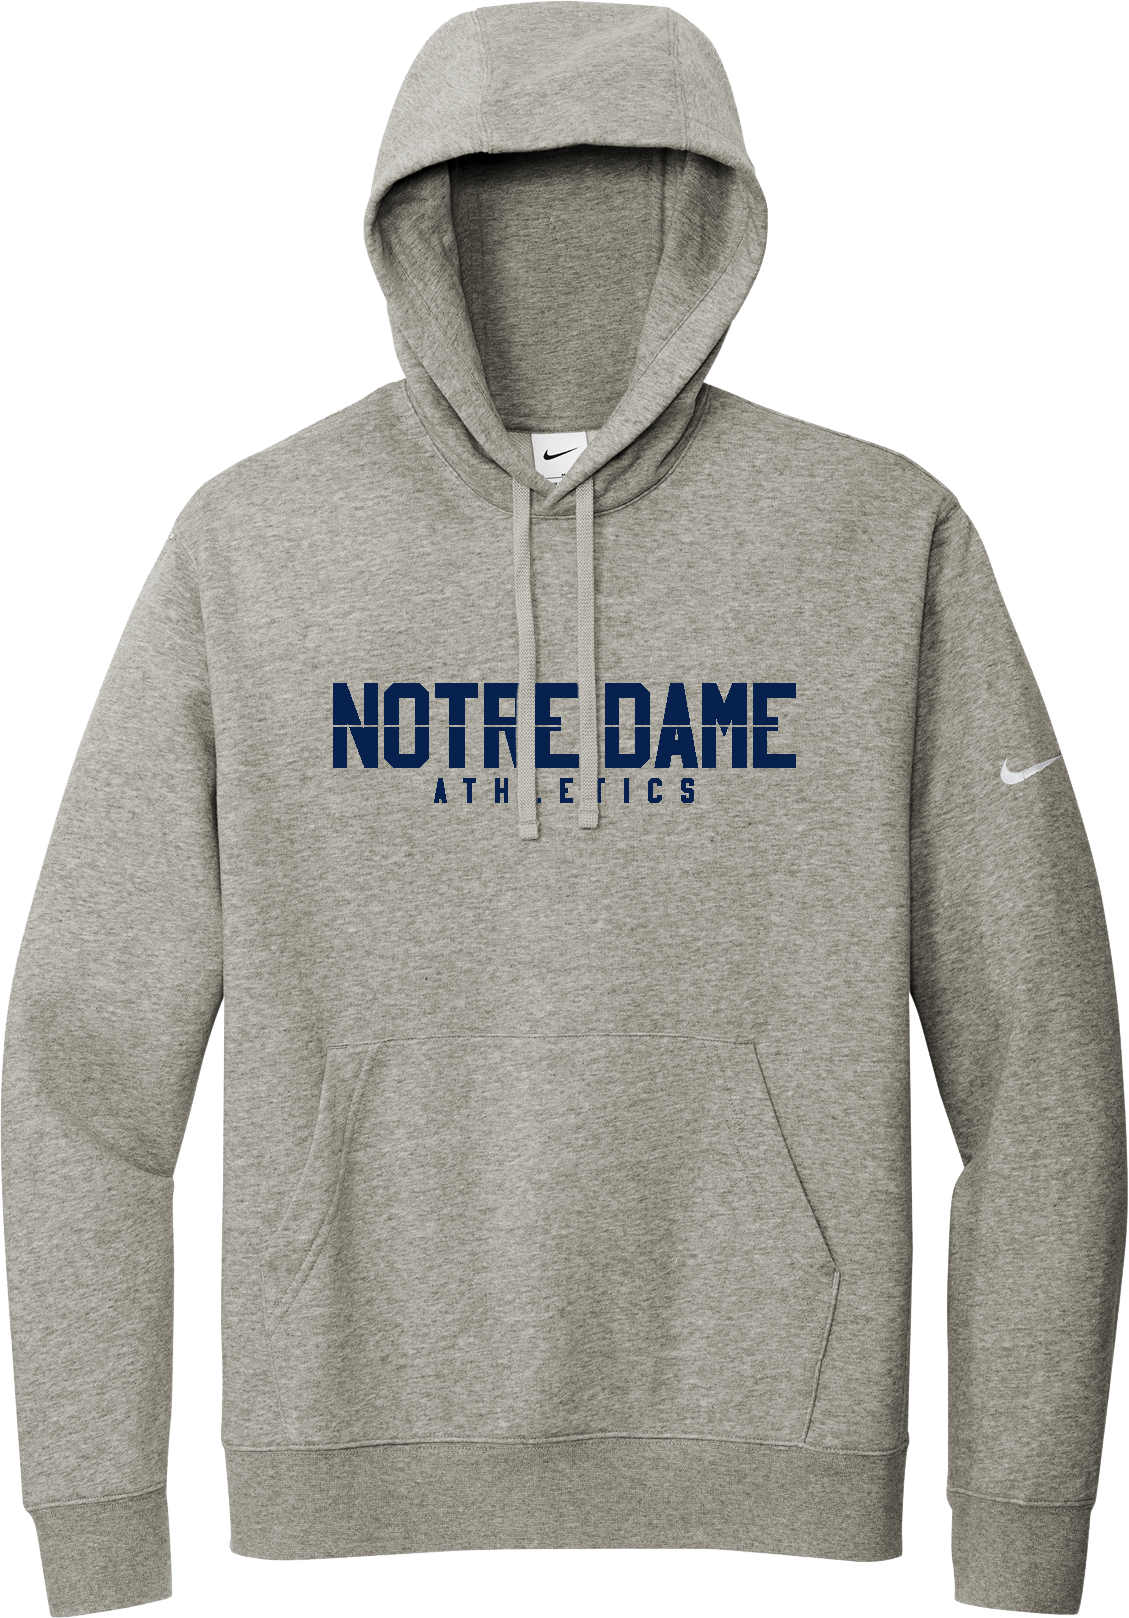 Notre Dame Athletics Nike Hoodie -DARK GREY HEATHER